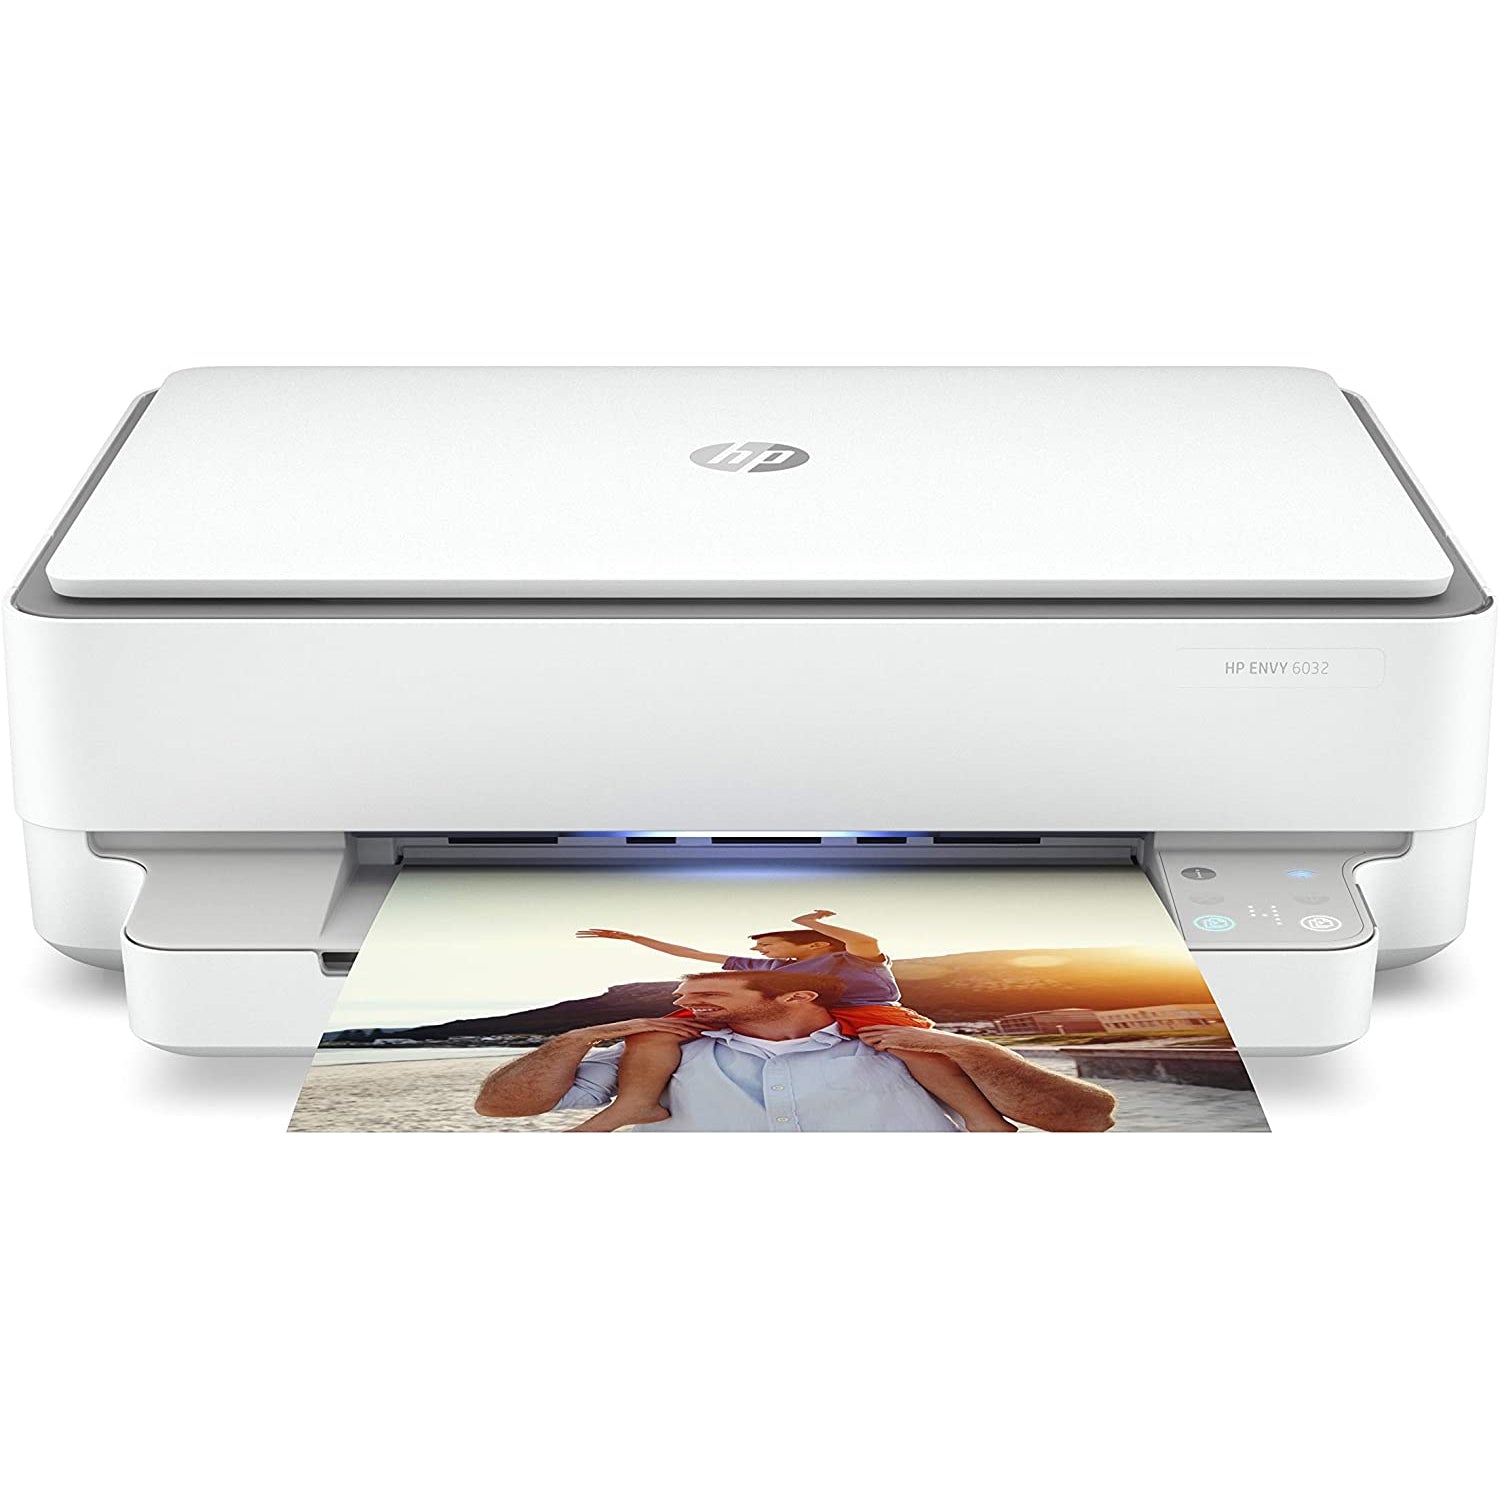 HP Envy 6032 All-in-One Wireless Inkjet Printer, White - Refurbished Pristine